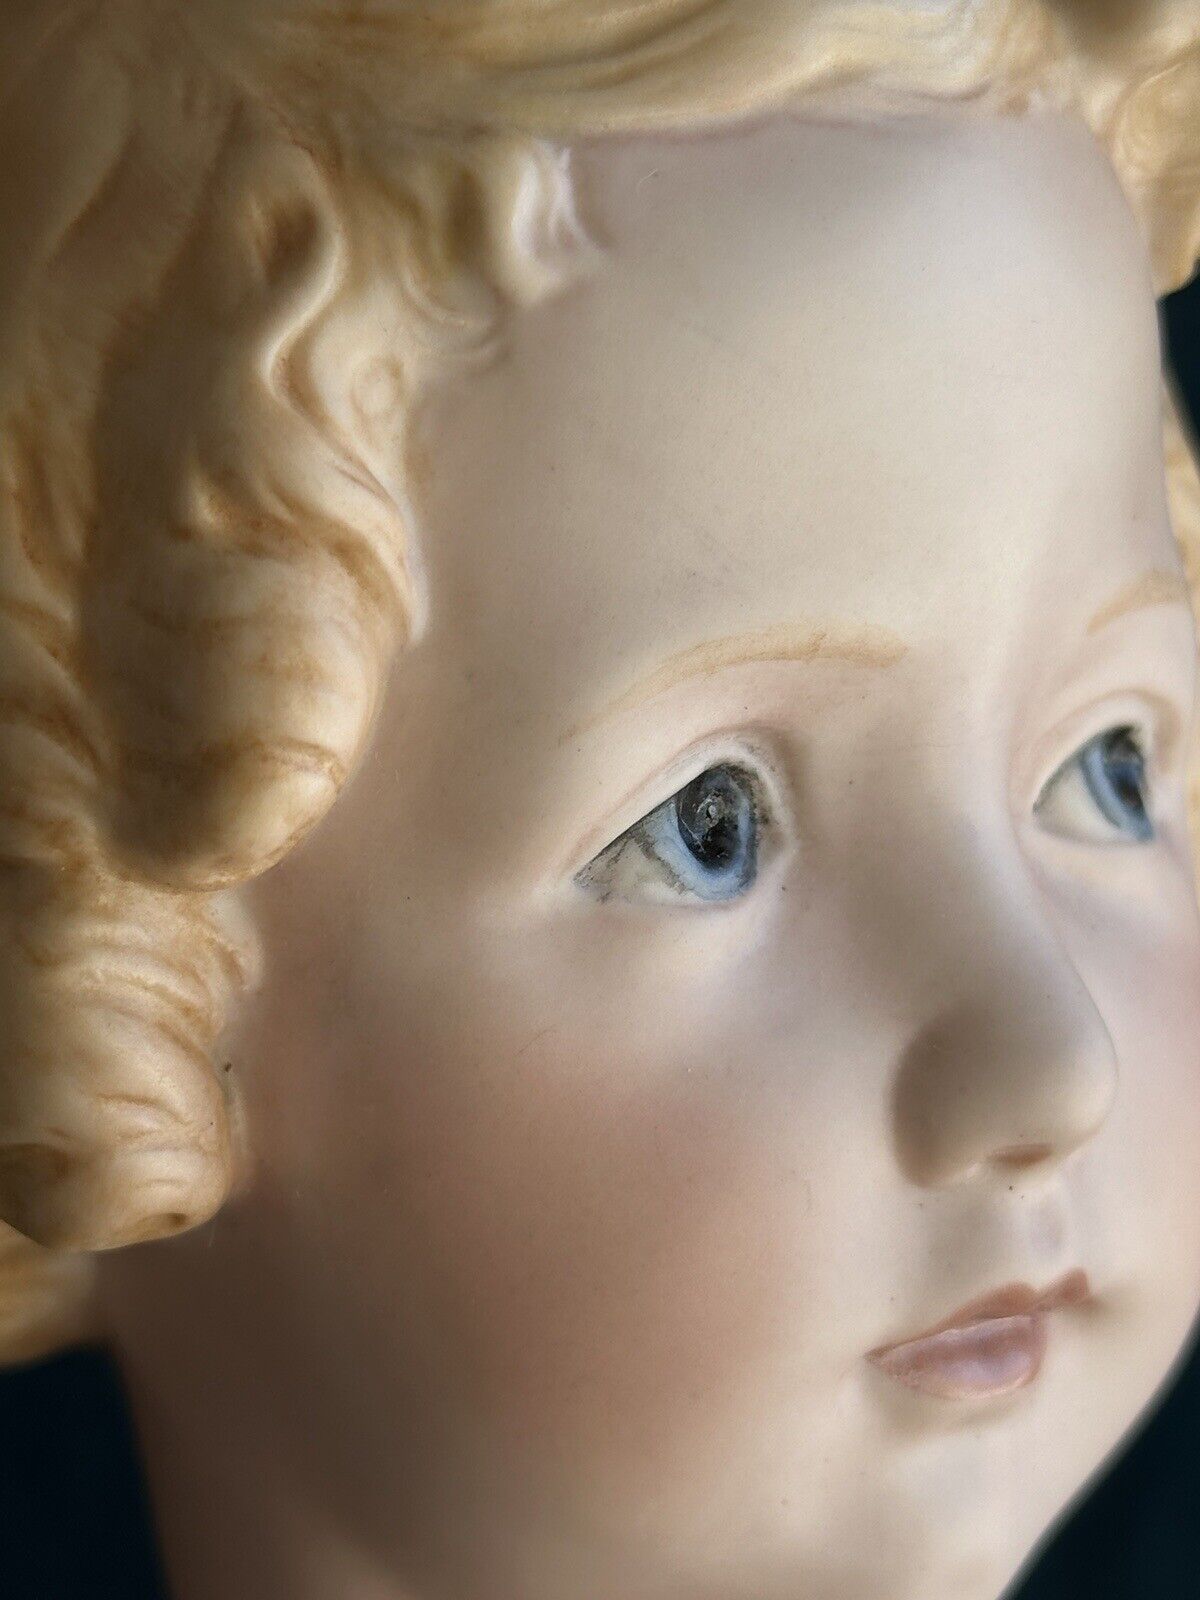 Porcelain/Composition 18” Reproduction of Antique German Gebruder Heubach Doll